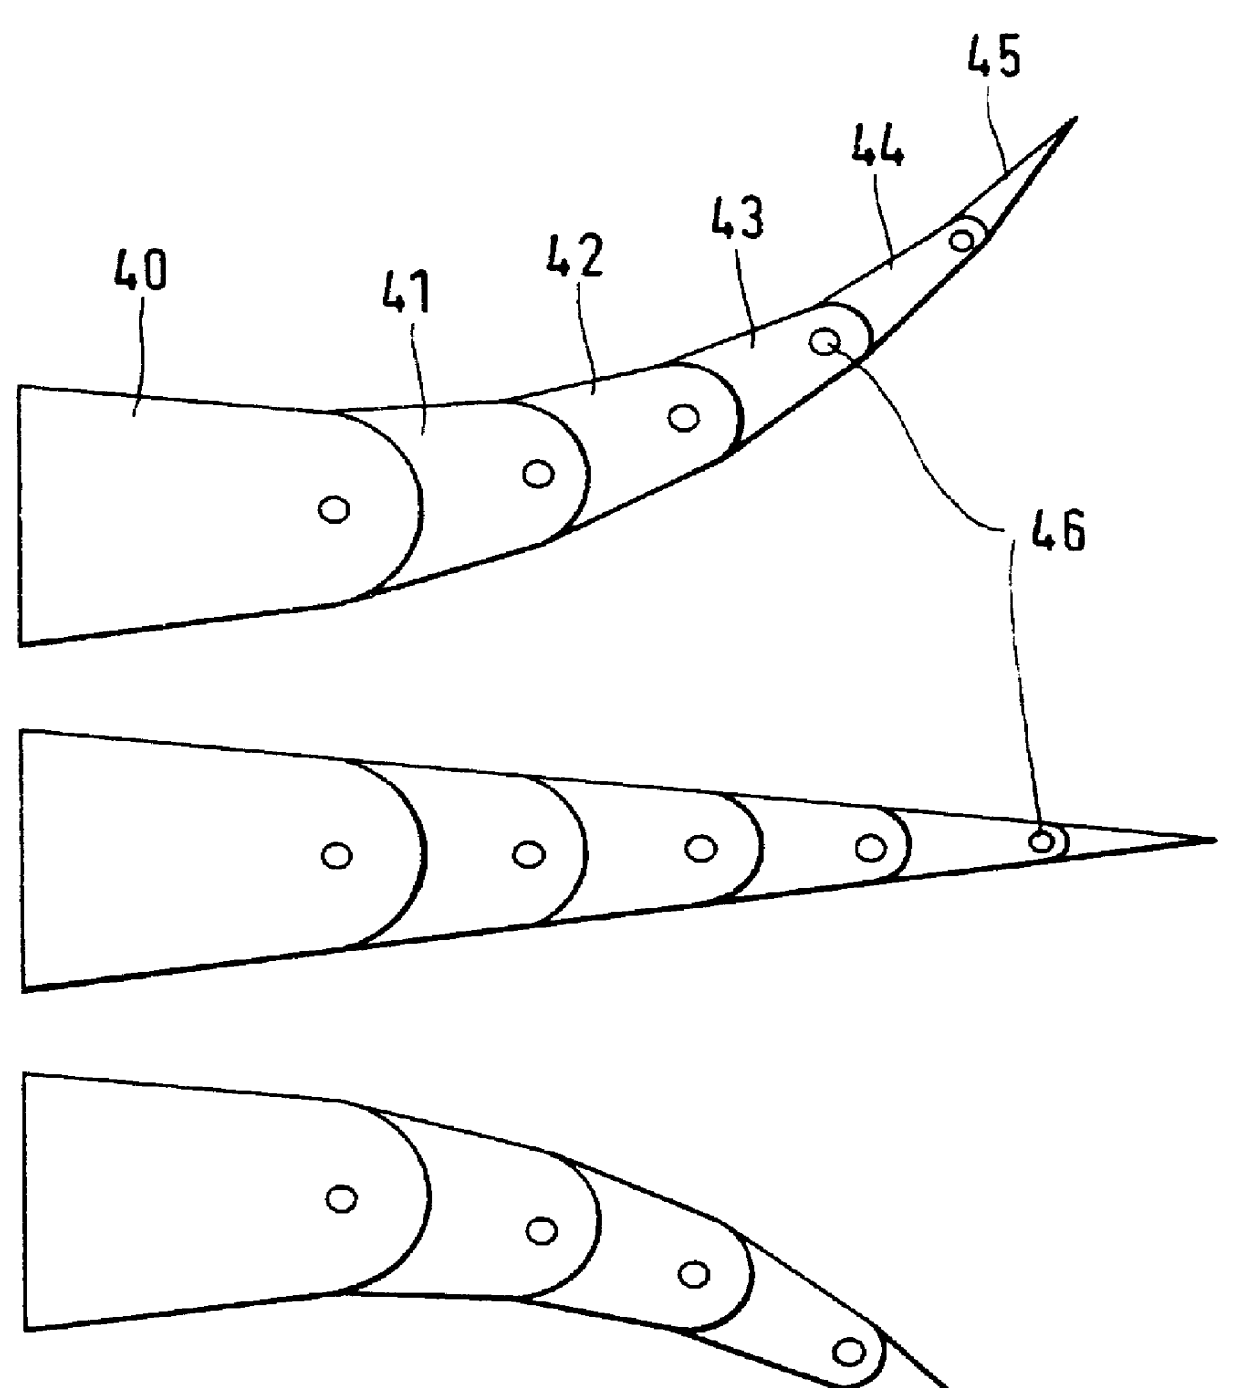 Aerofoil profile with variable profile adaptation